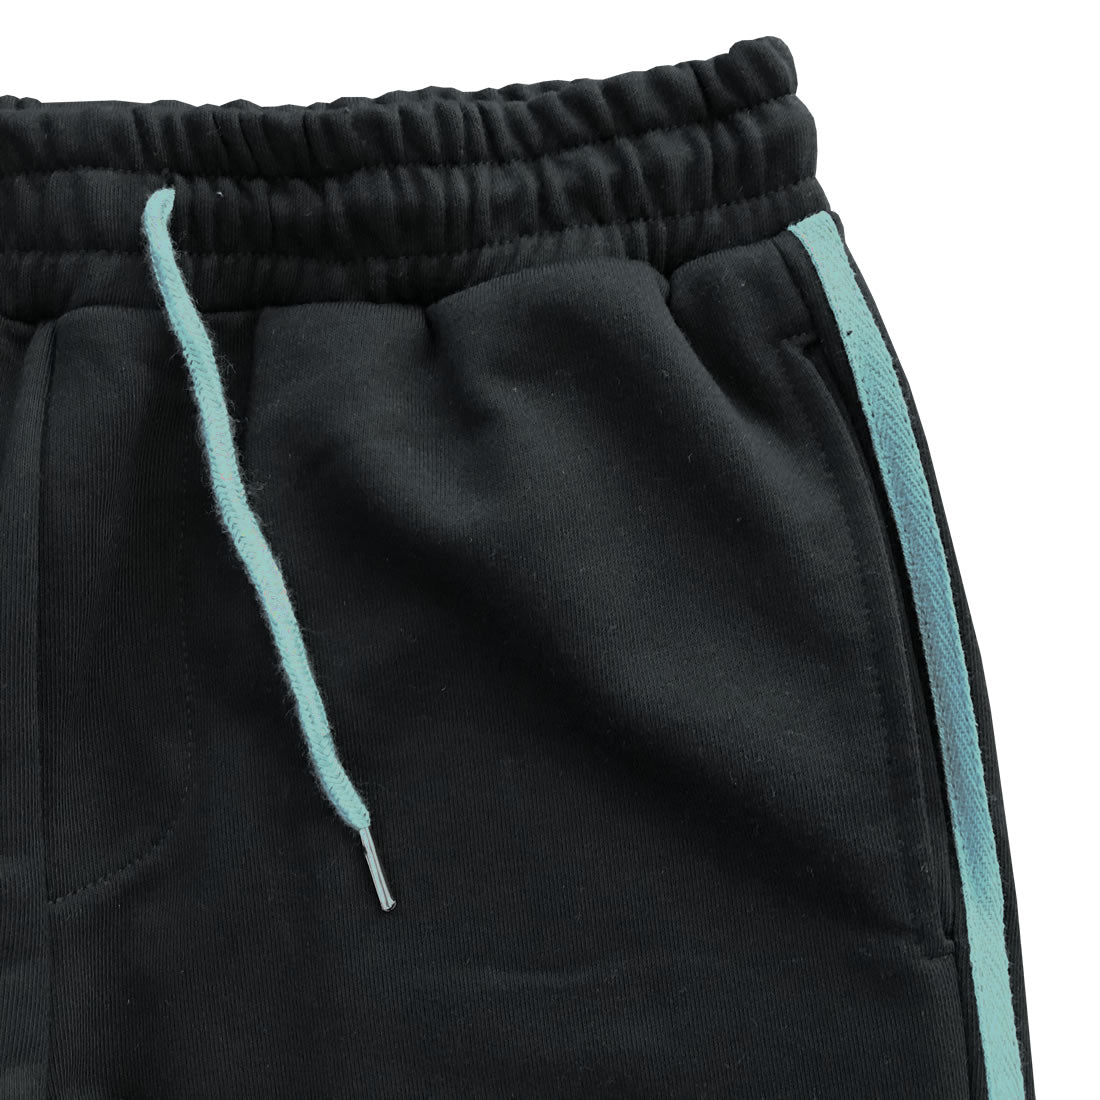 Black with Blue Stripes Jogger Sweatpants Pocket